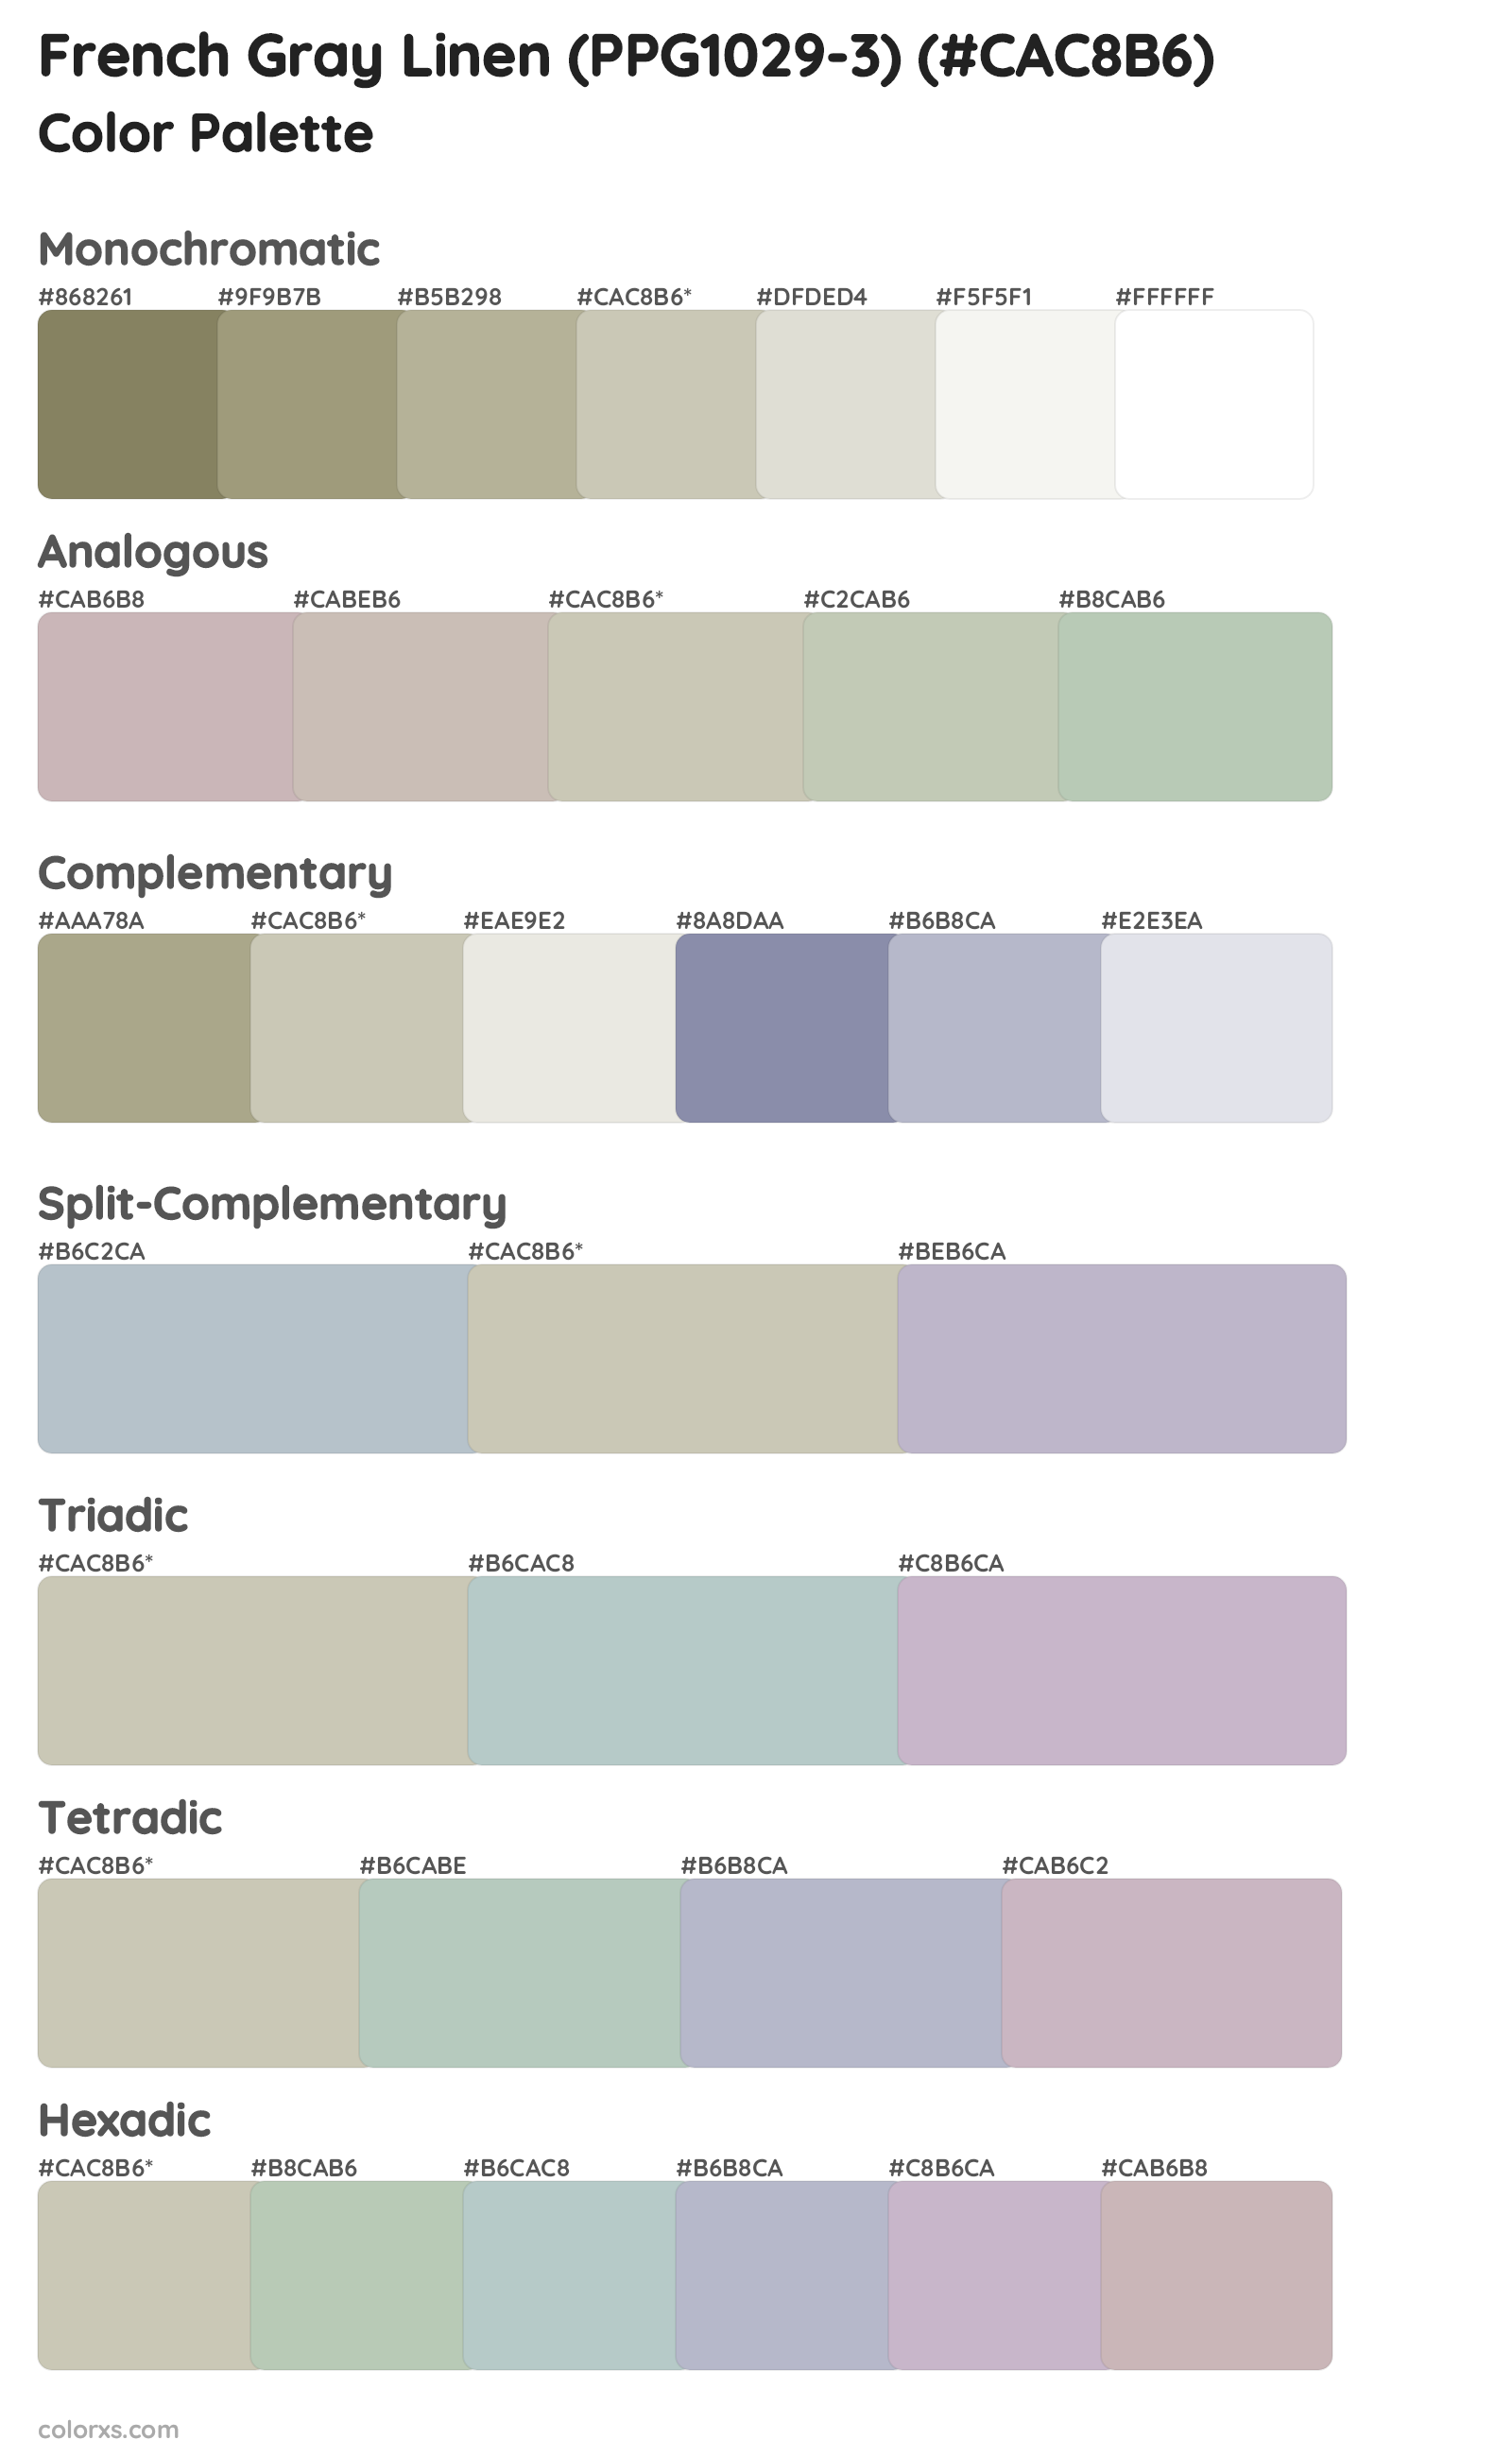 French Gray Linen (PPG1029-3) Color Scheme Palettes